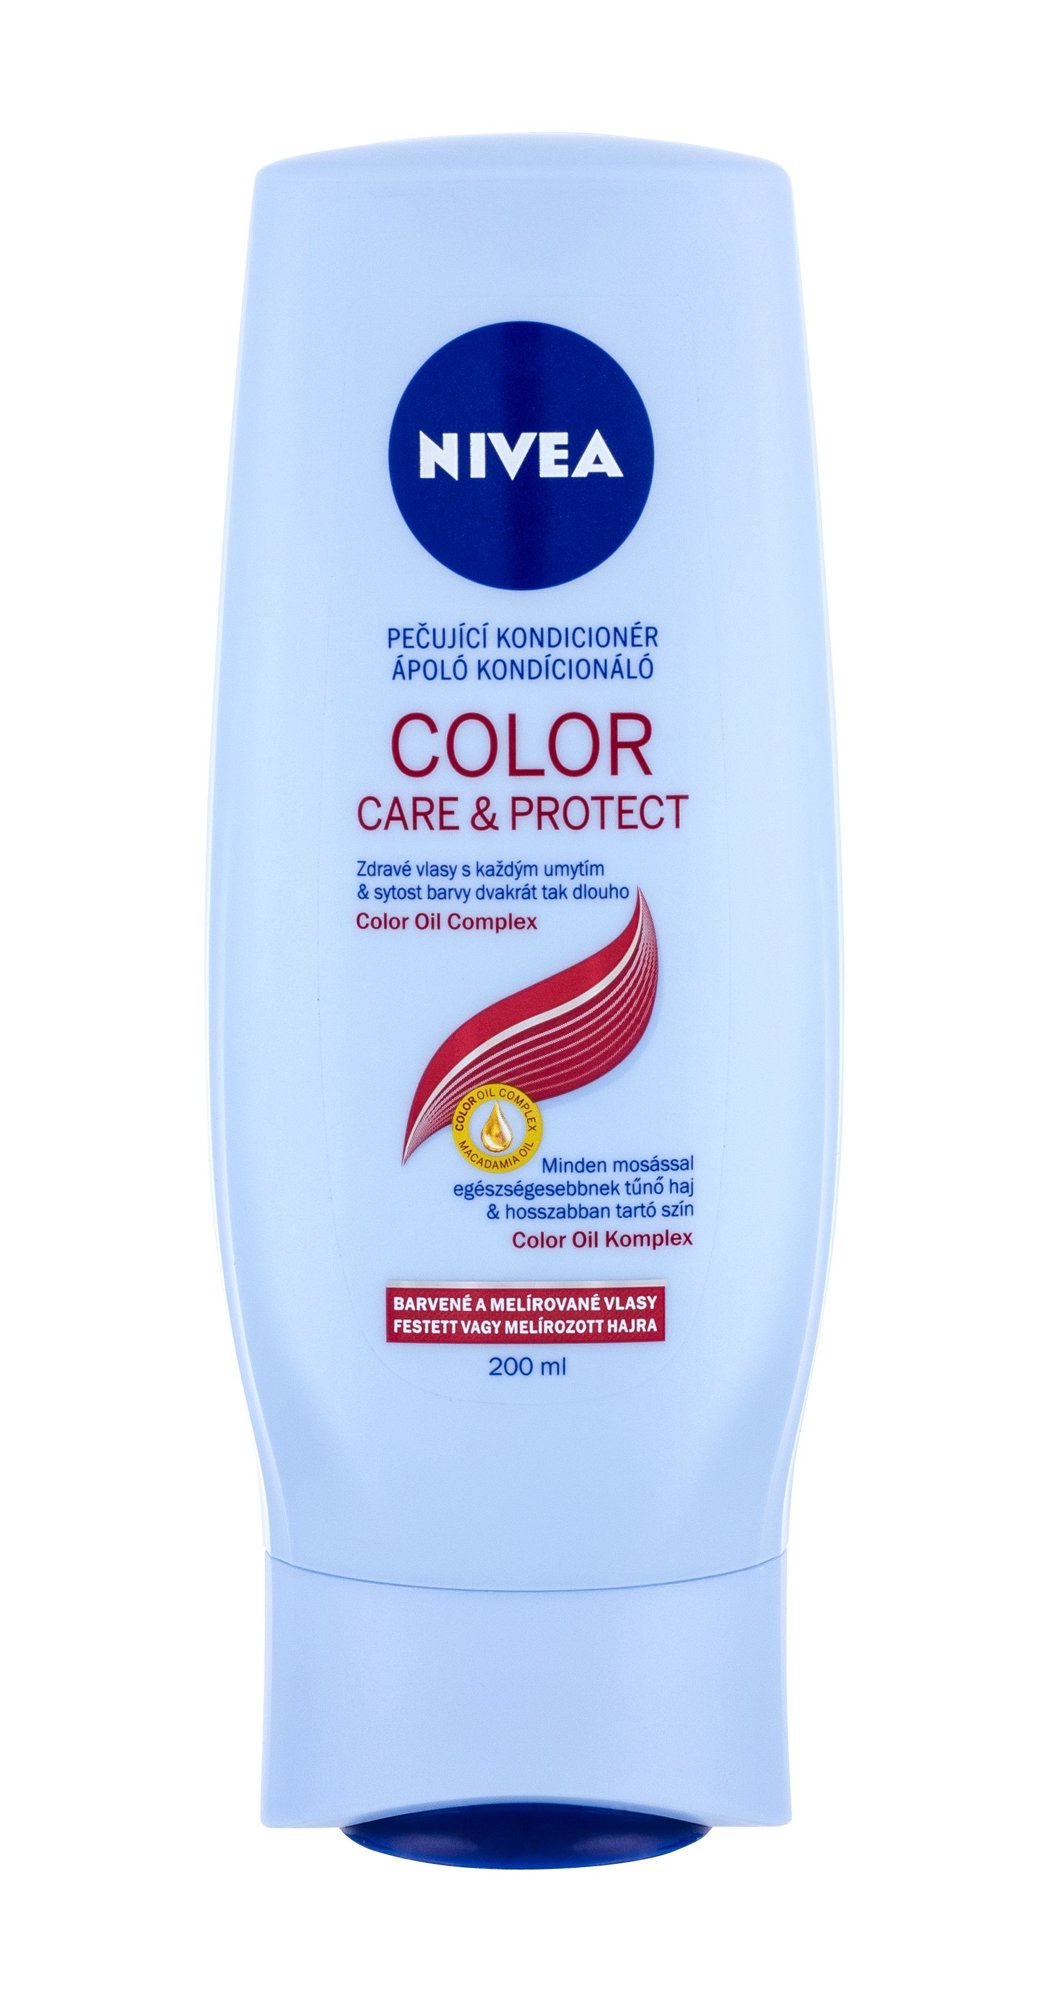 Nivea Color Protect Care kondicionierius